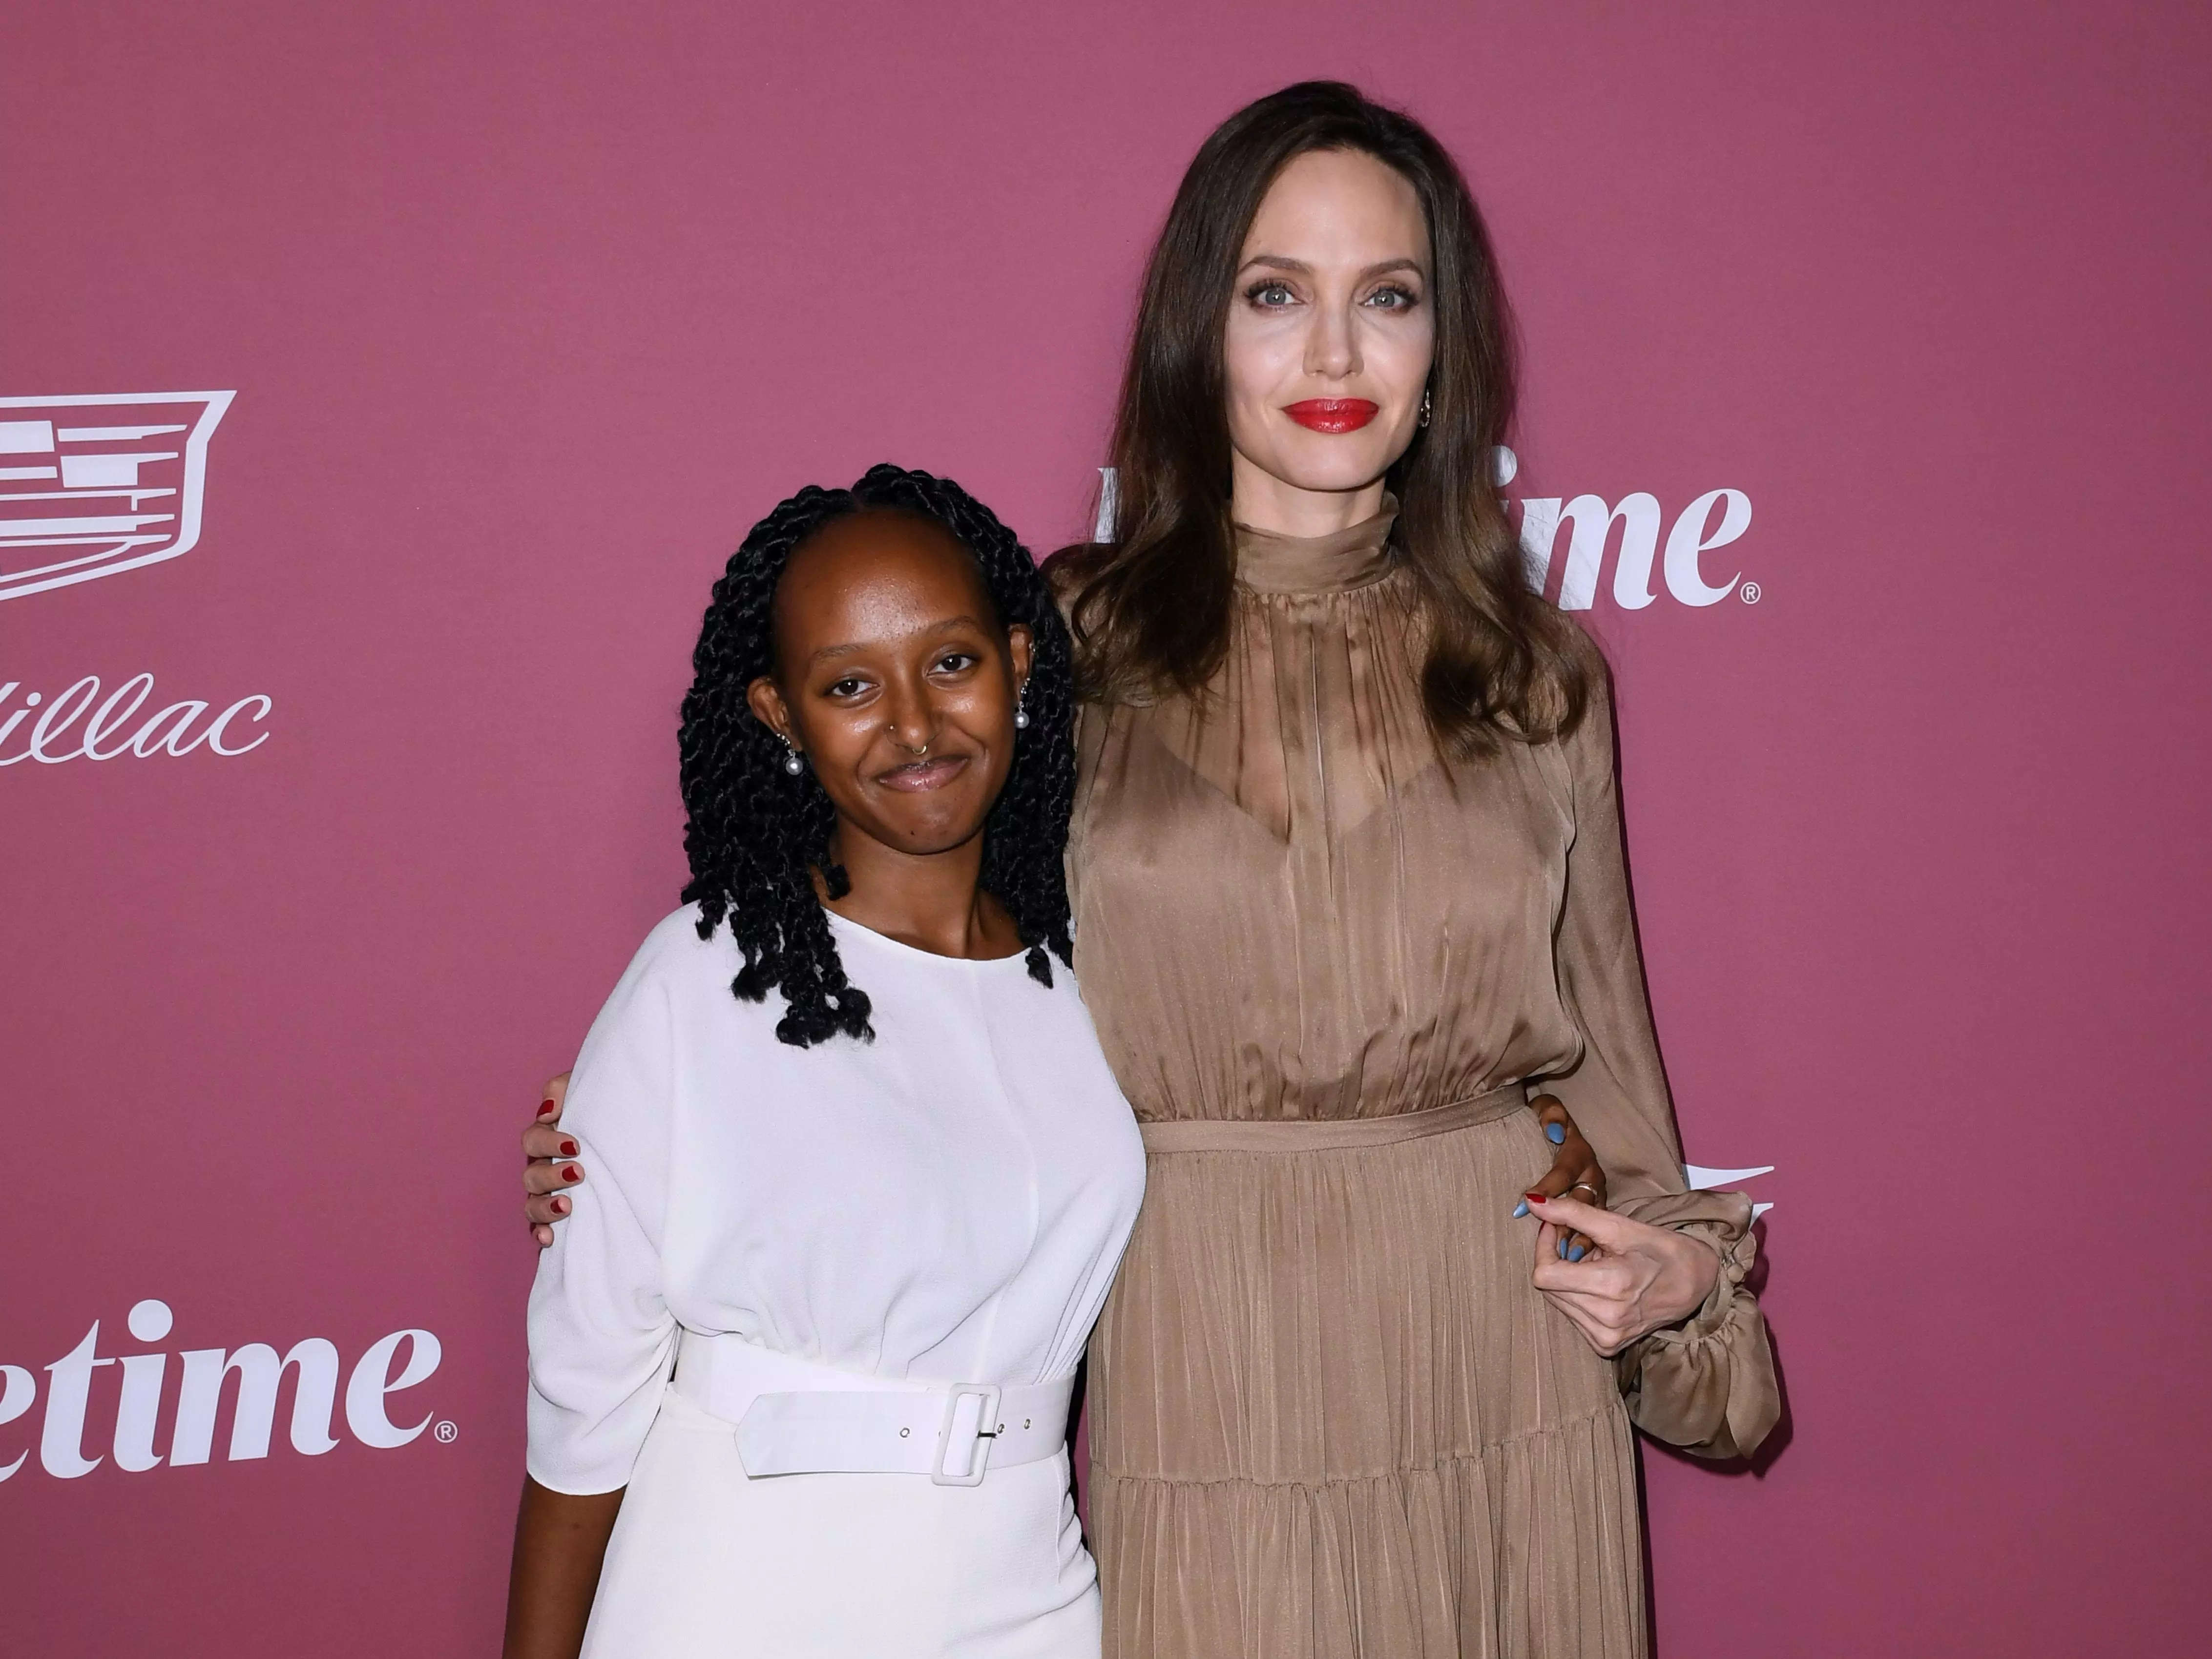 Angelina Jolie wears Elie Saab kaftan while shopping in LA